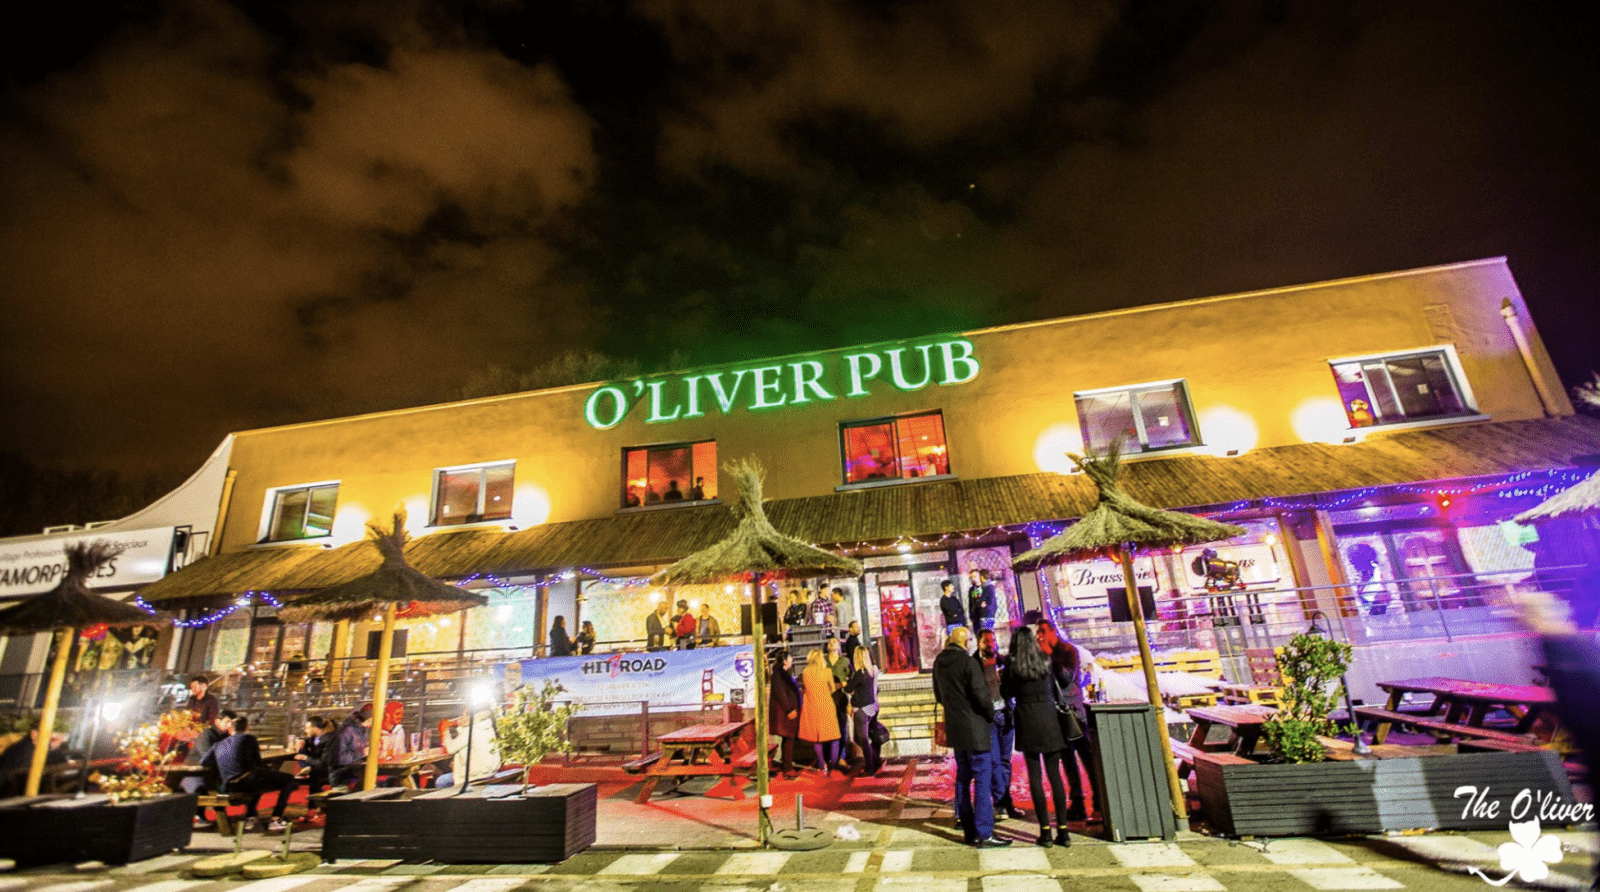 The Oliver Pub